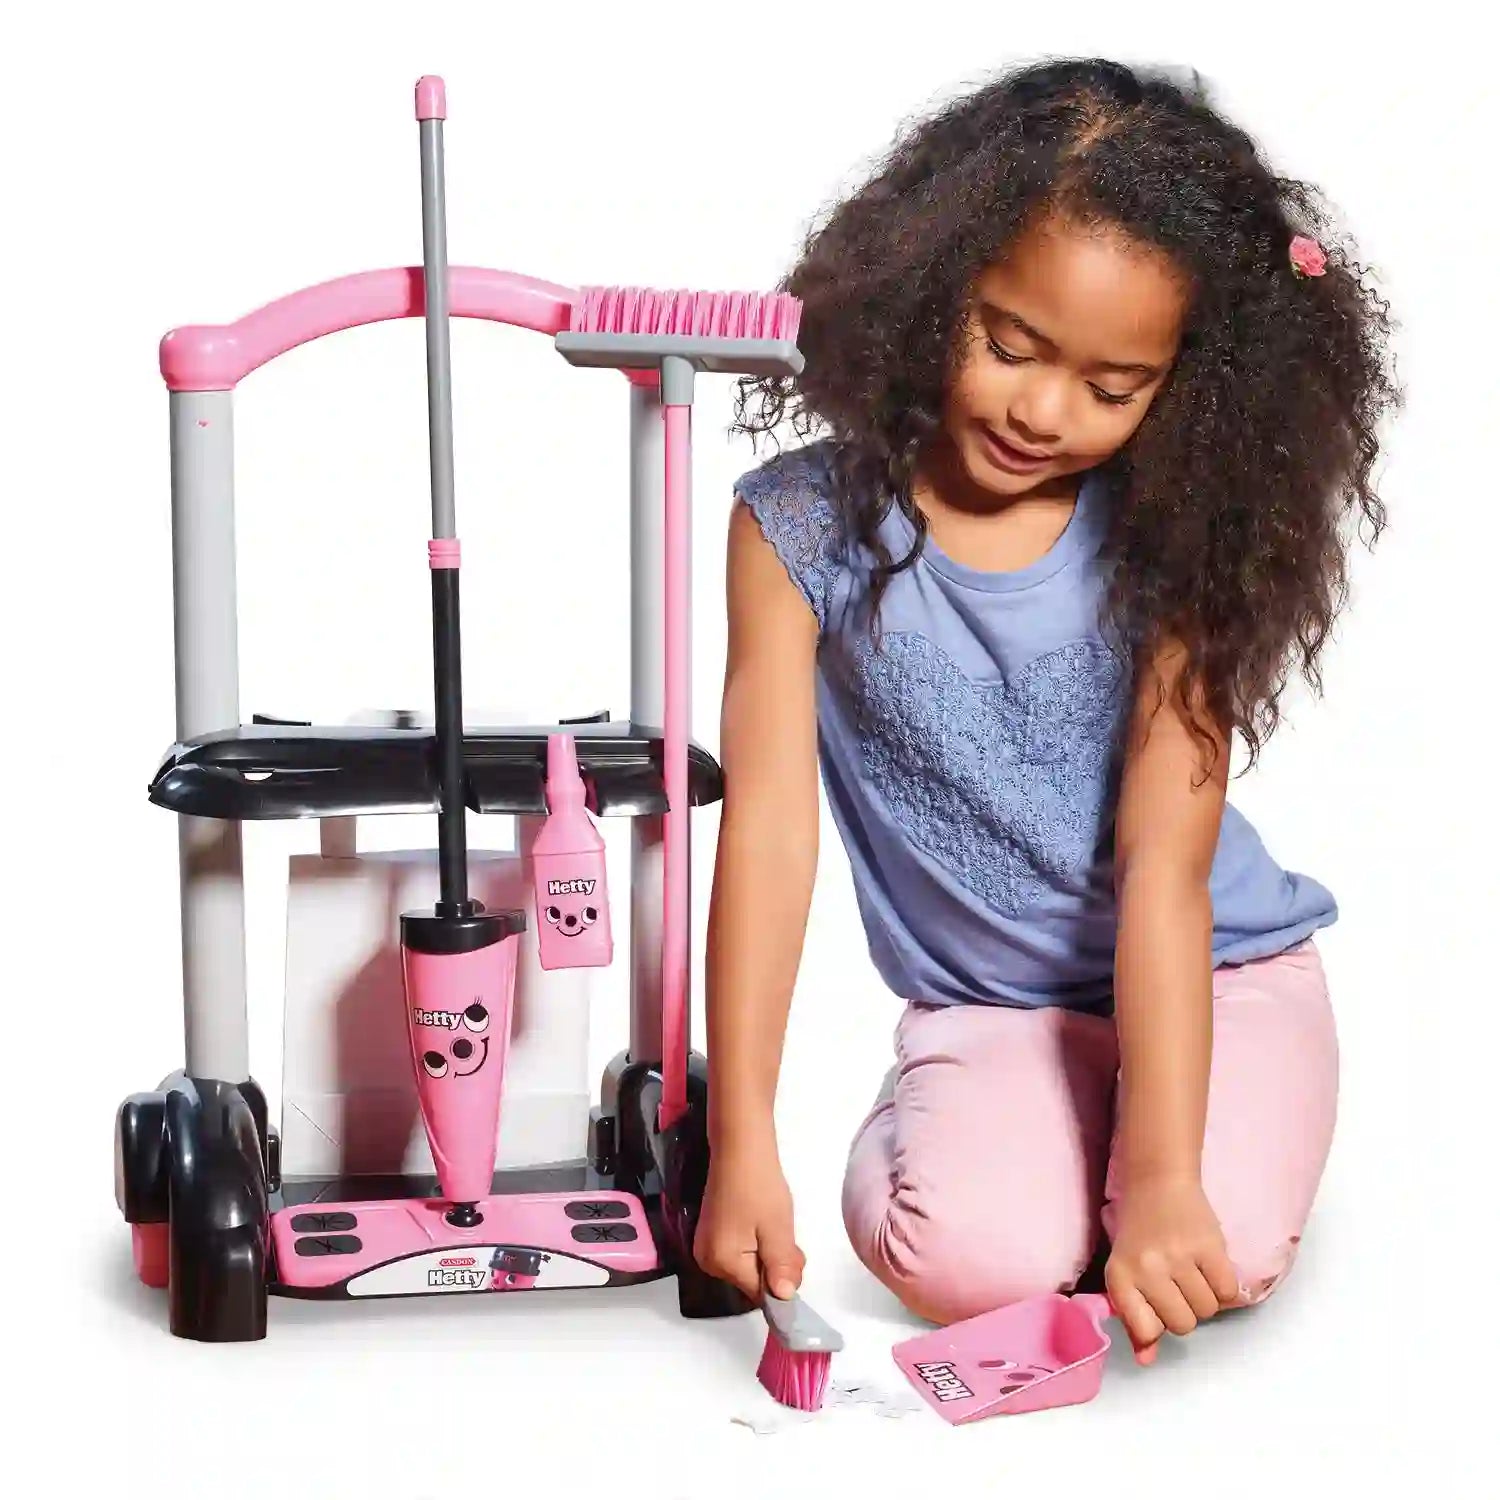 Casdon - Hetty Cleaning Trolley Toy